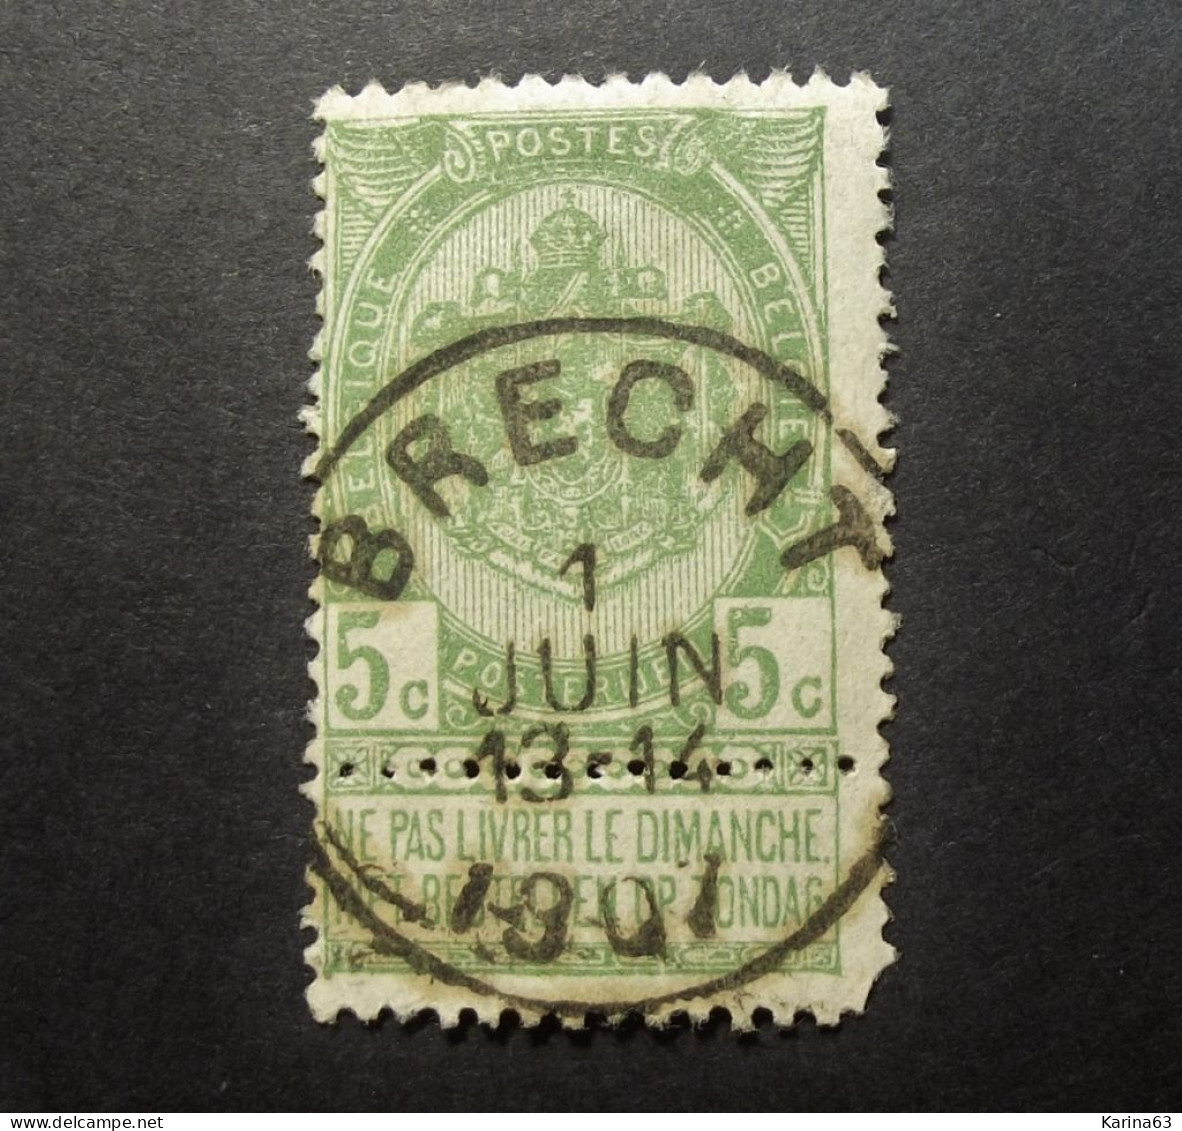 Belgie Belgique - 1893 - OPB/COB N° 56 ( 1 Value ) -   Obl. Brecht - 1907 - 1893-1907 Wappen